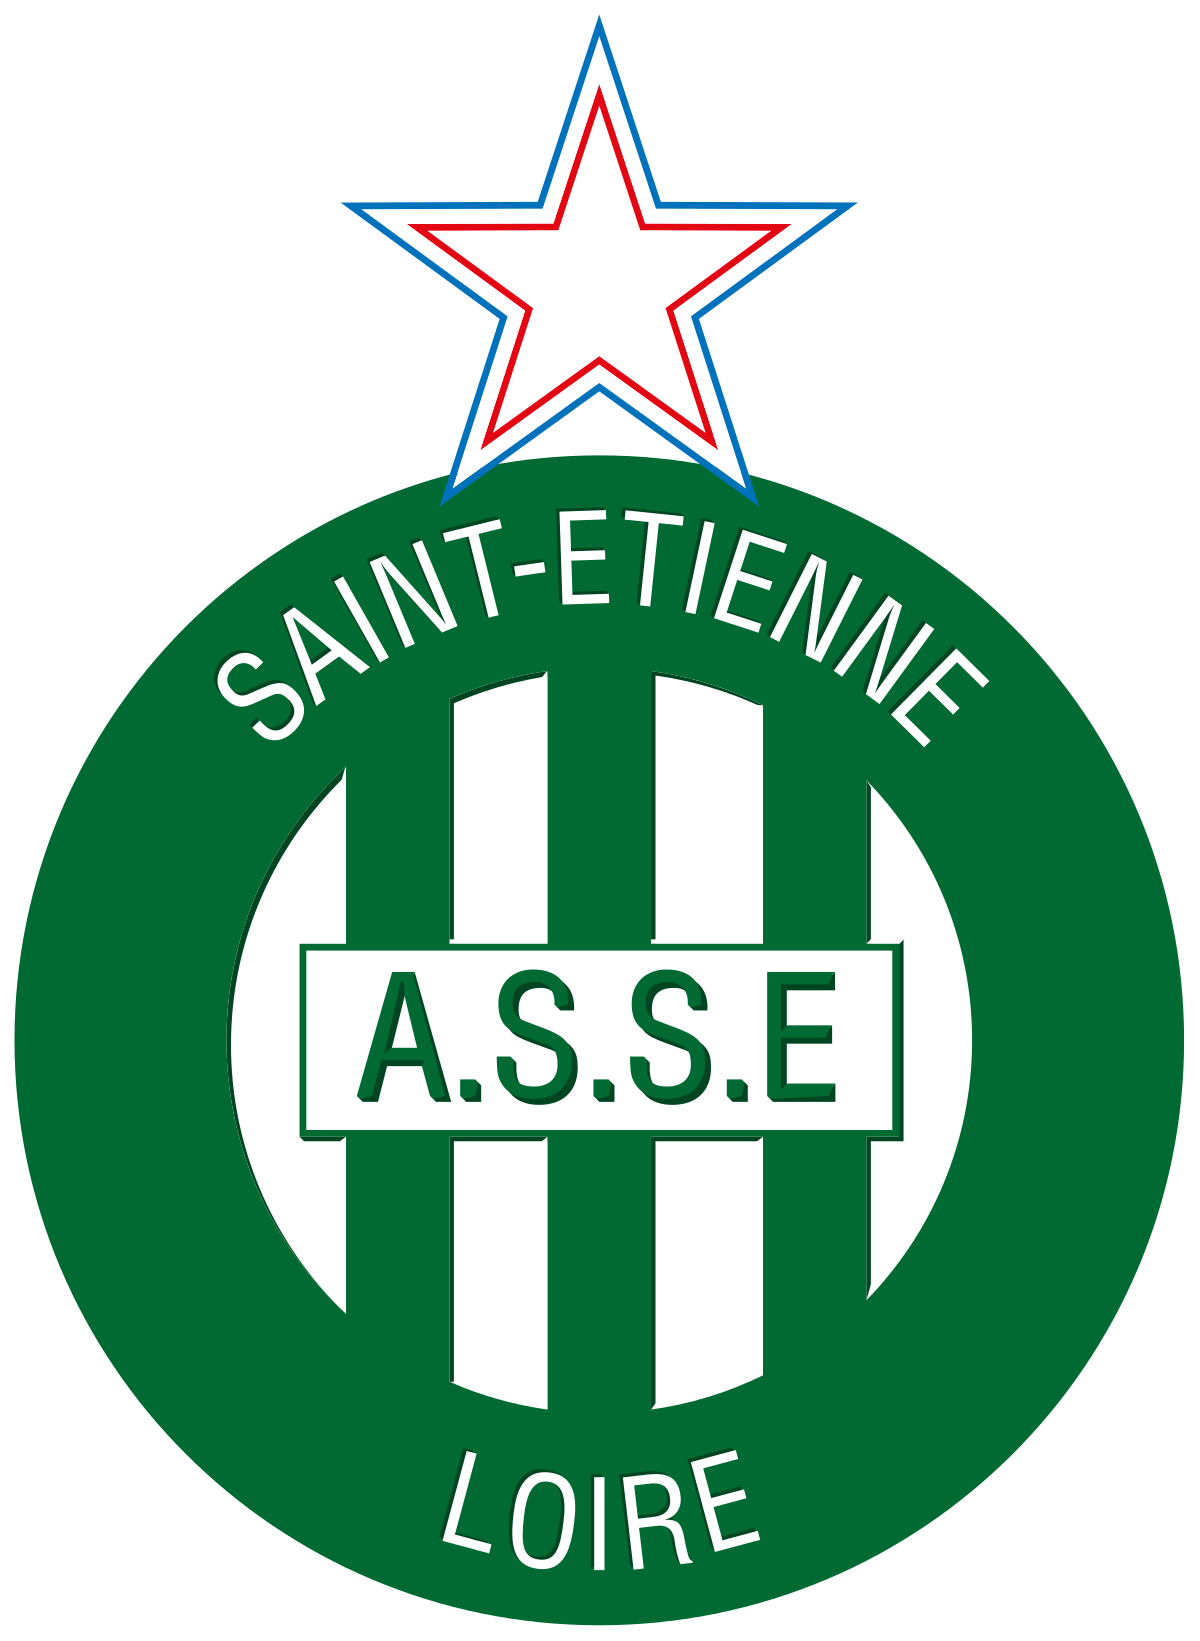 Saint-Etienne U-19 logo